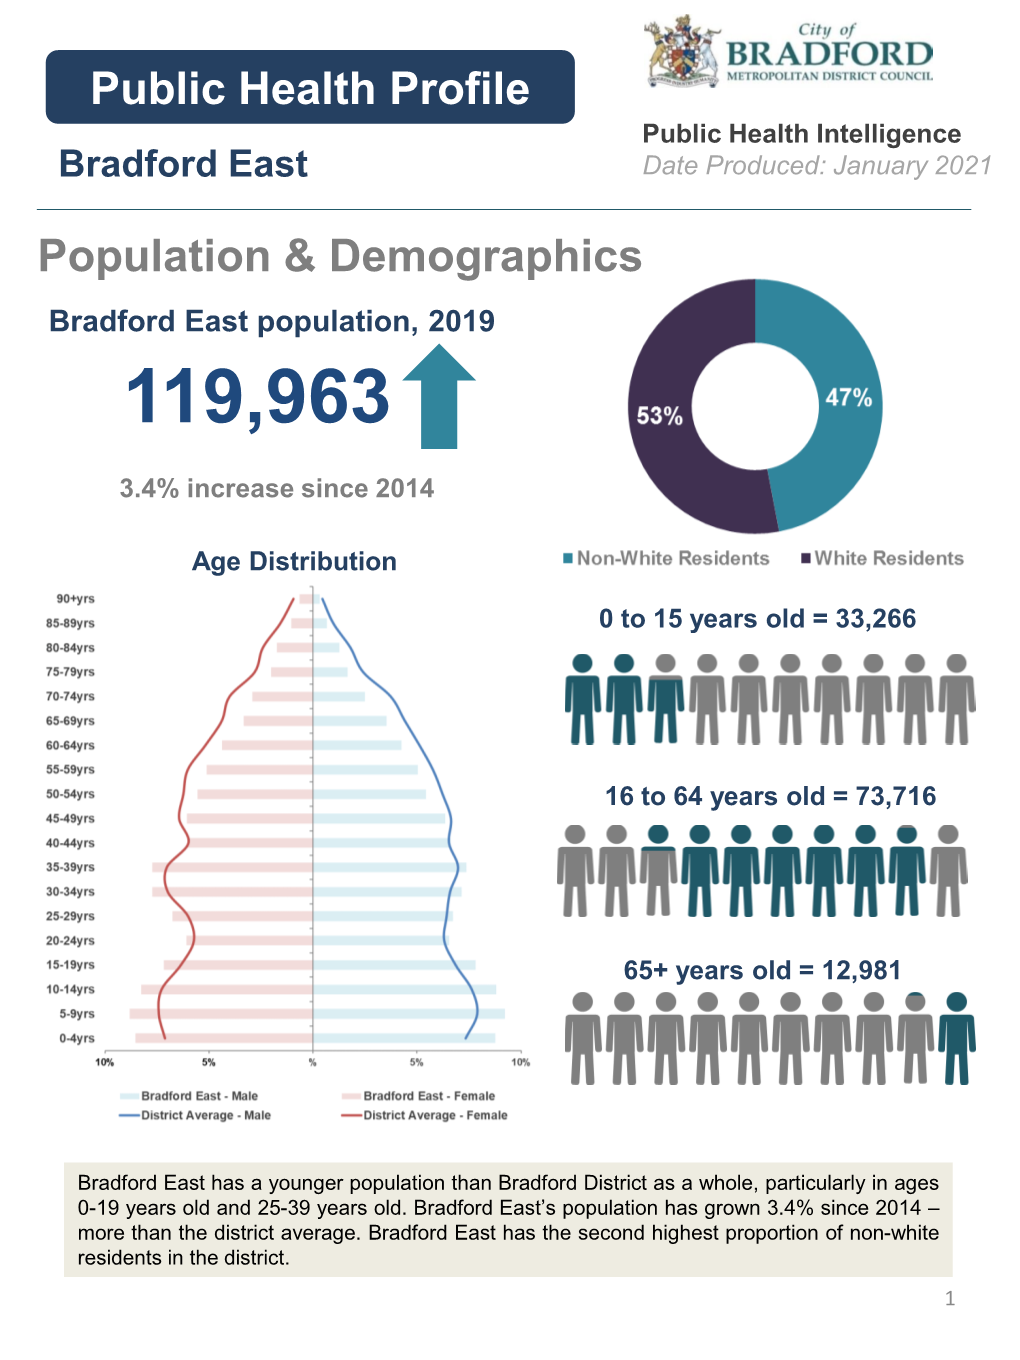 Population & Demographics Public Health Profile